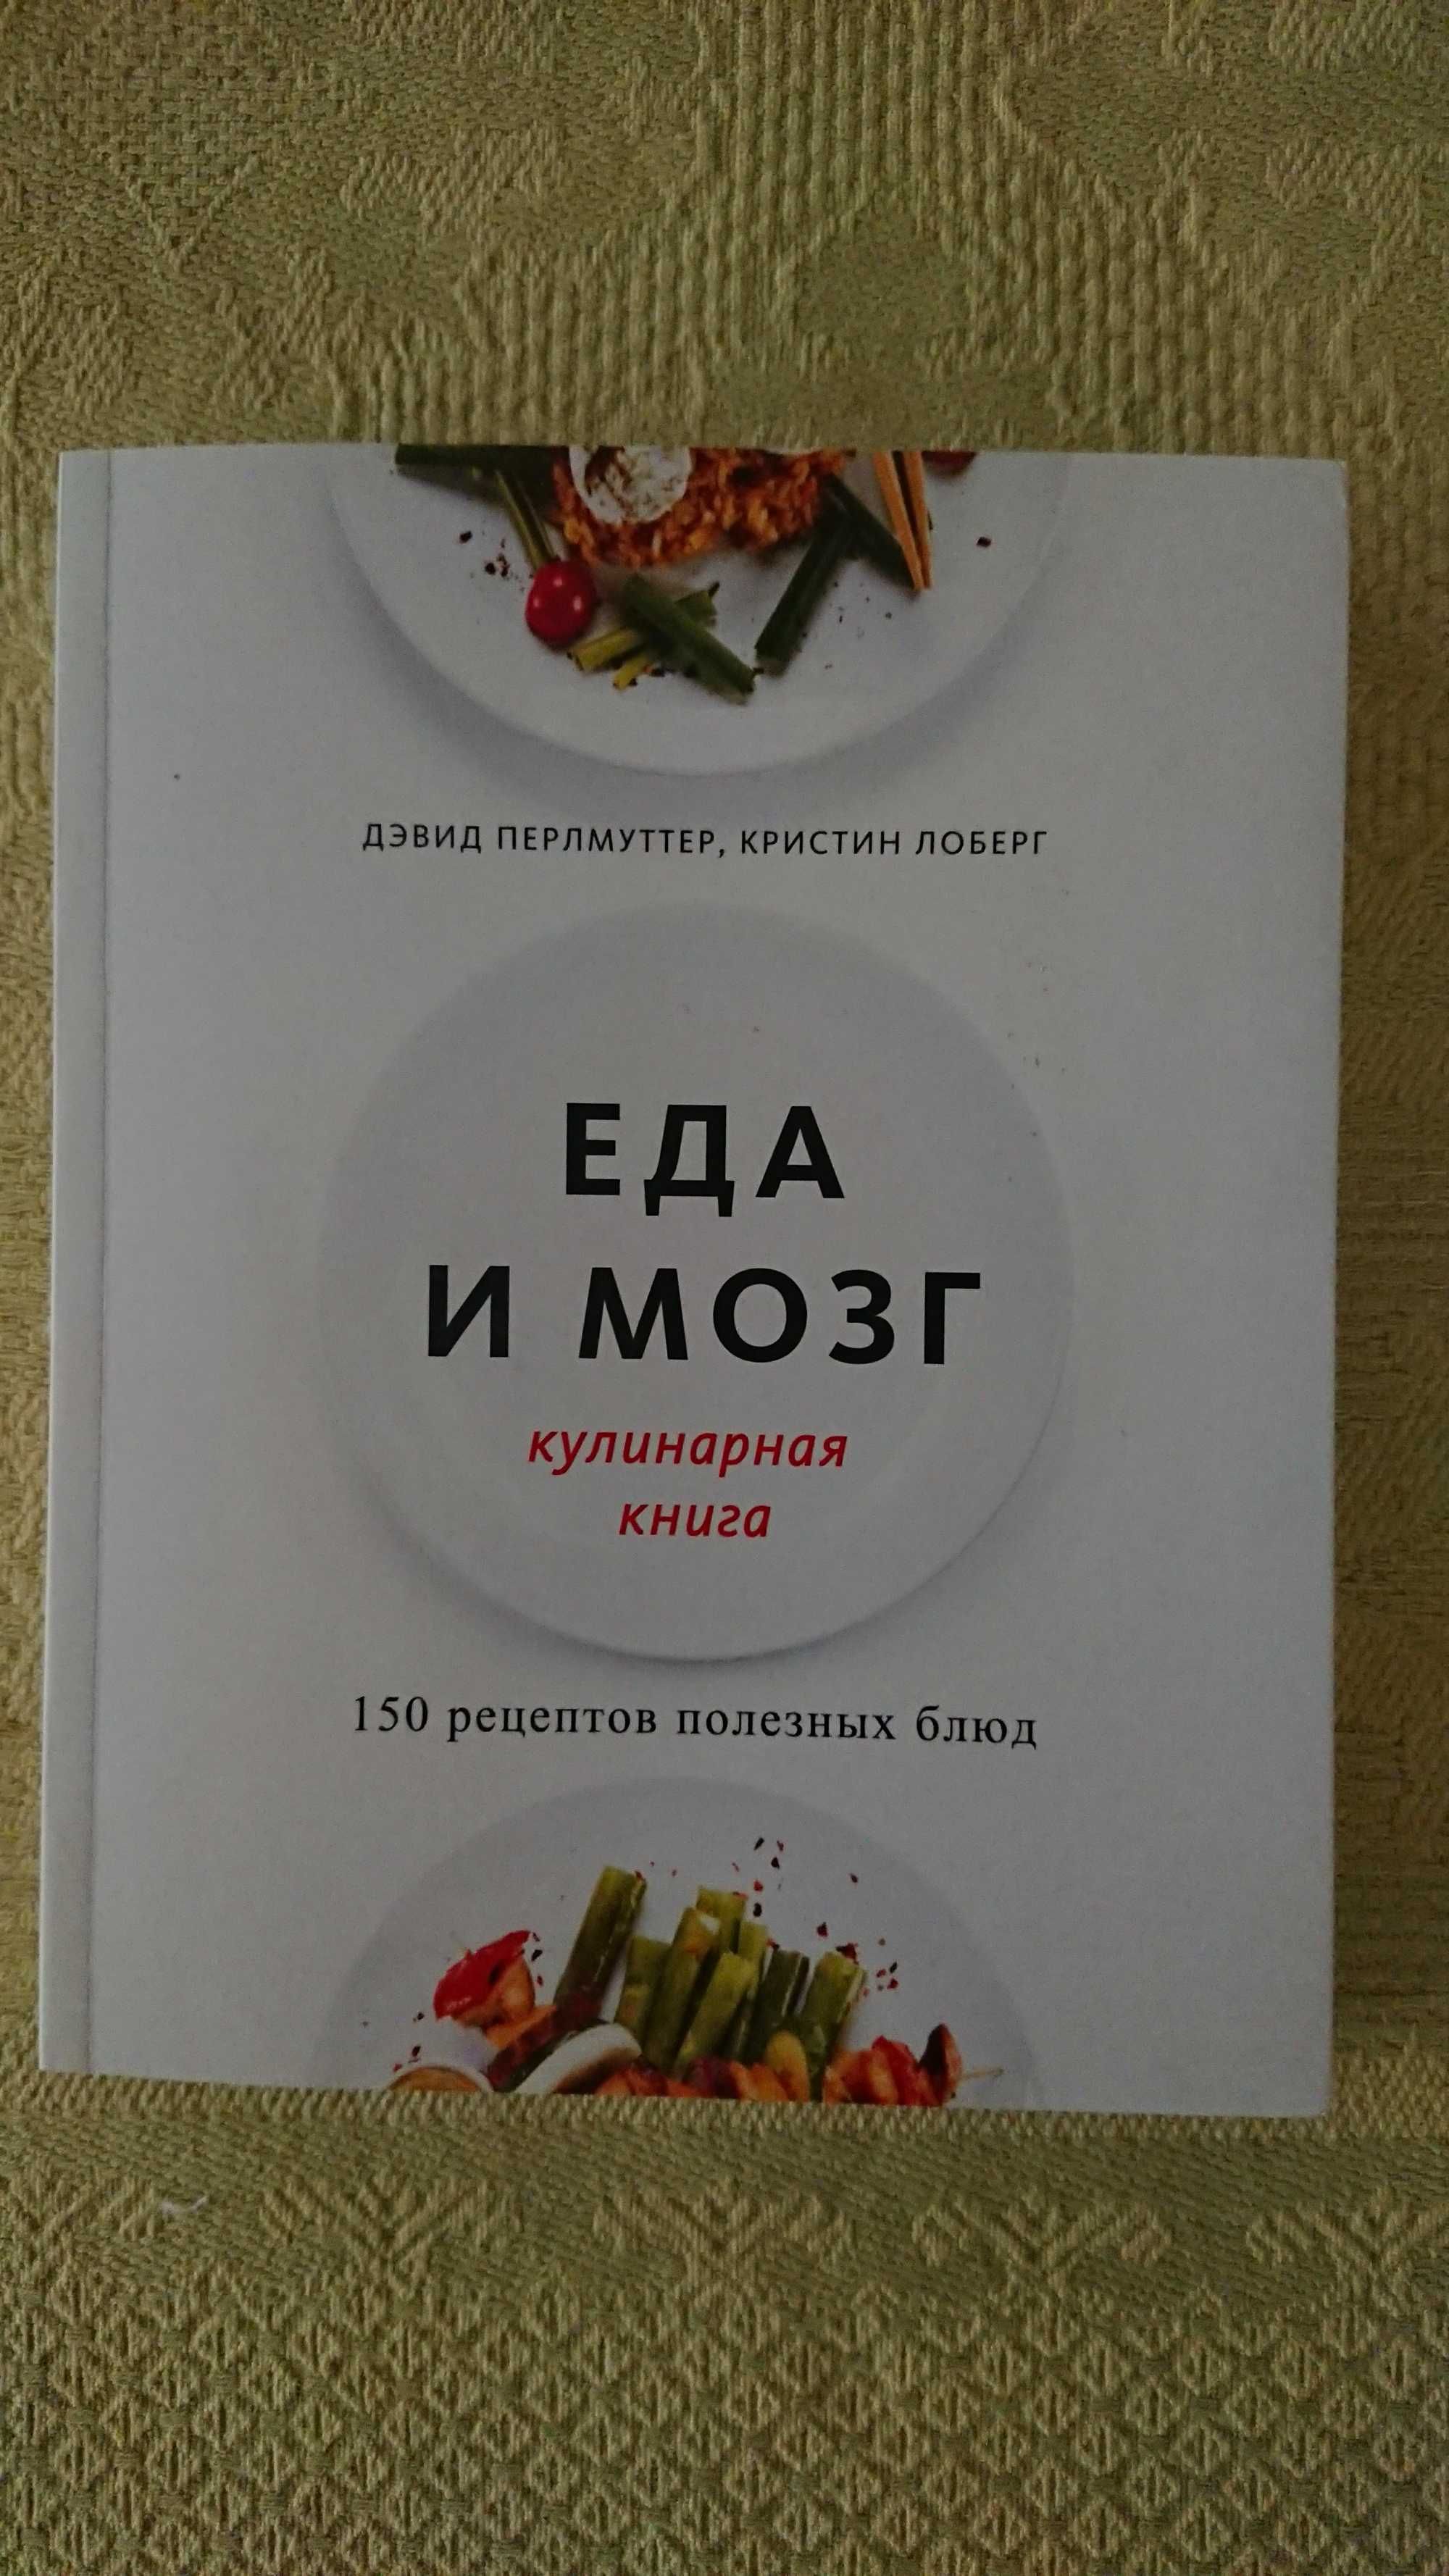 Продаю кулинарную книгу "Еда и мозг" (новая)